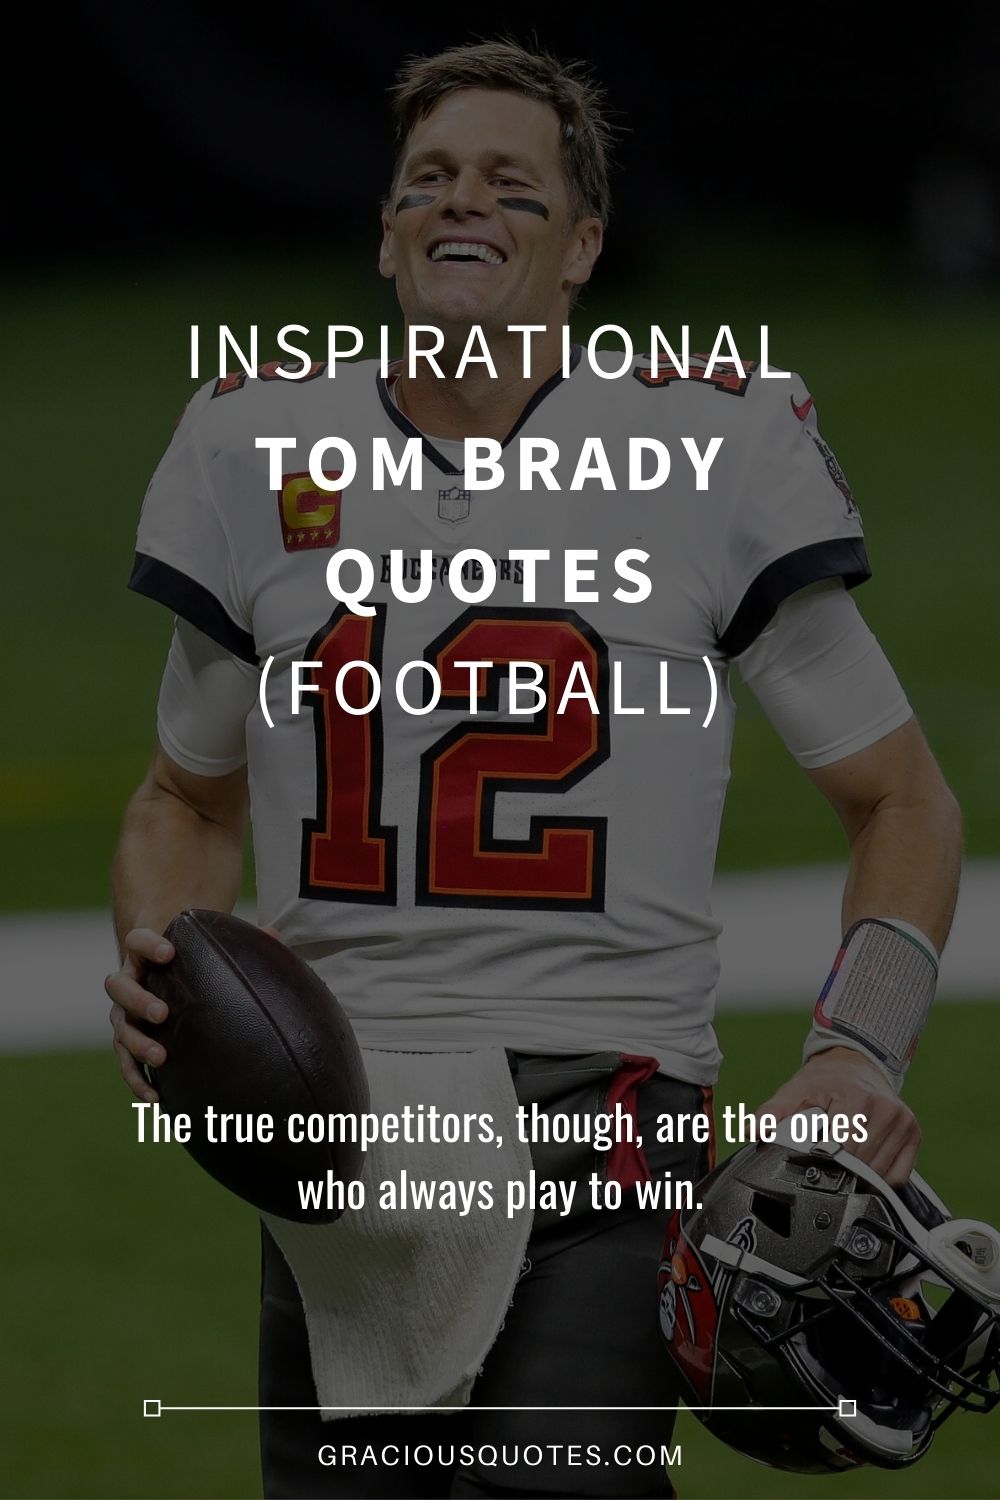 Inspirational Tom Brady Quotes (FOOTBALL) - Gracious Quotes